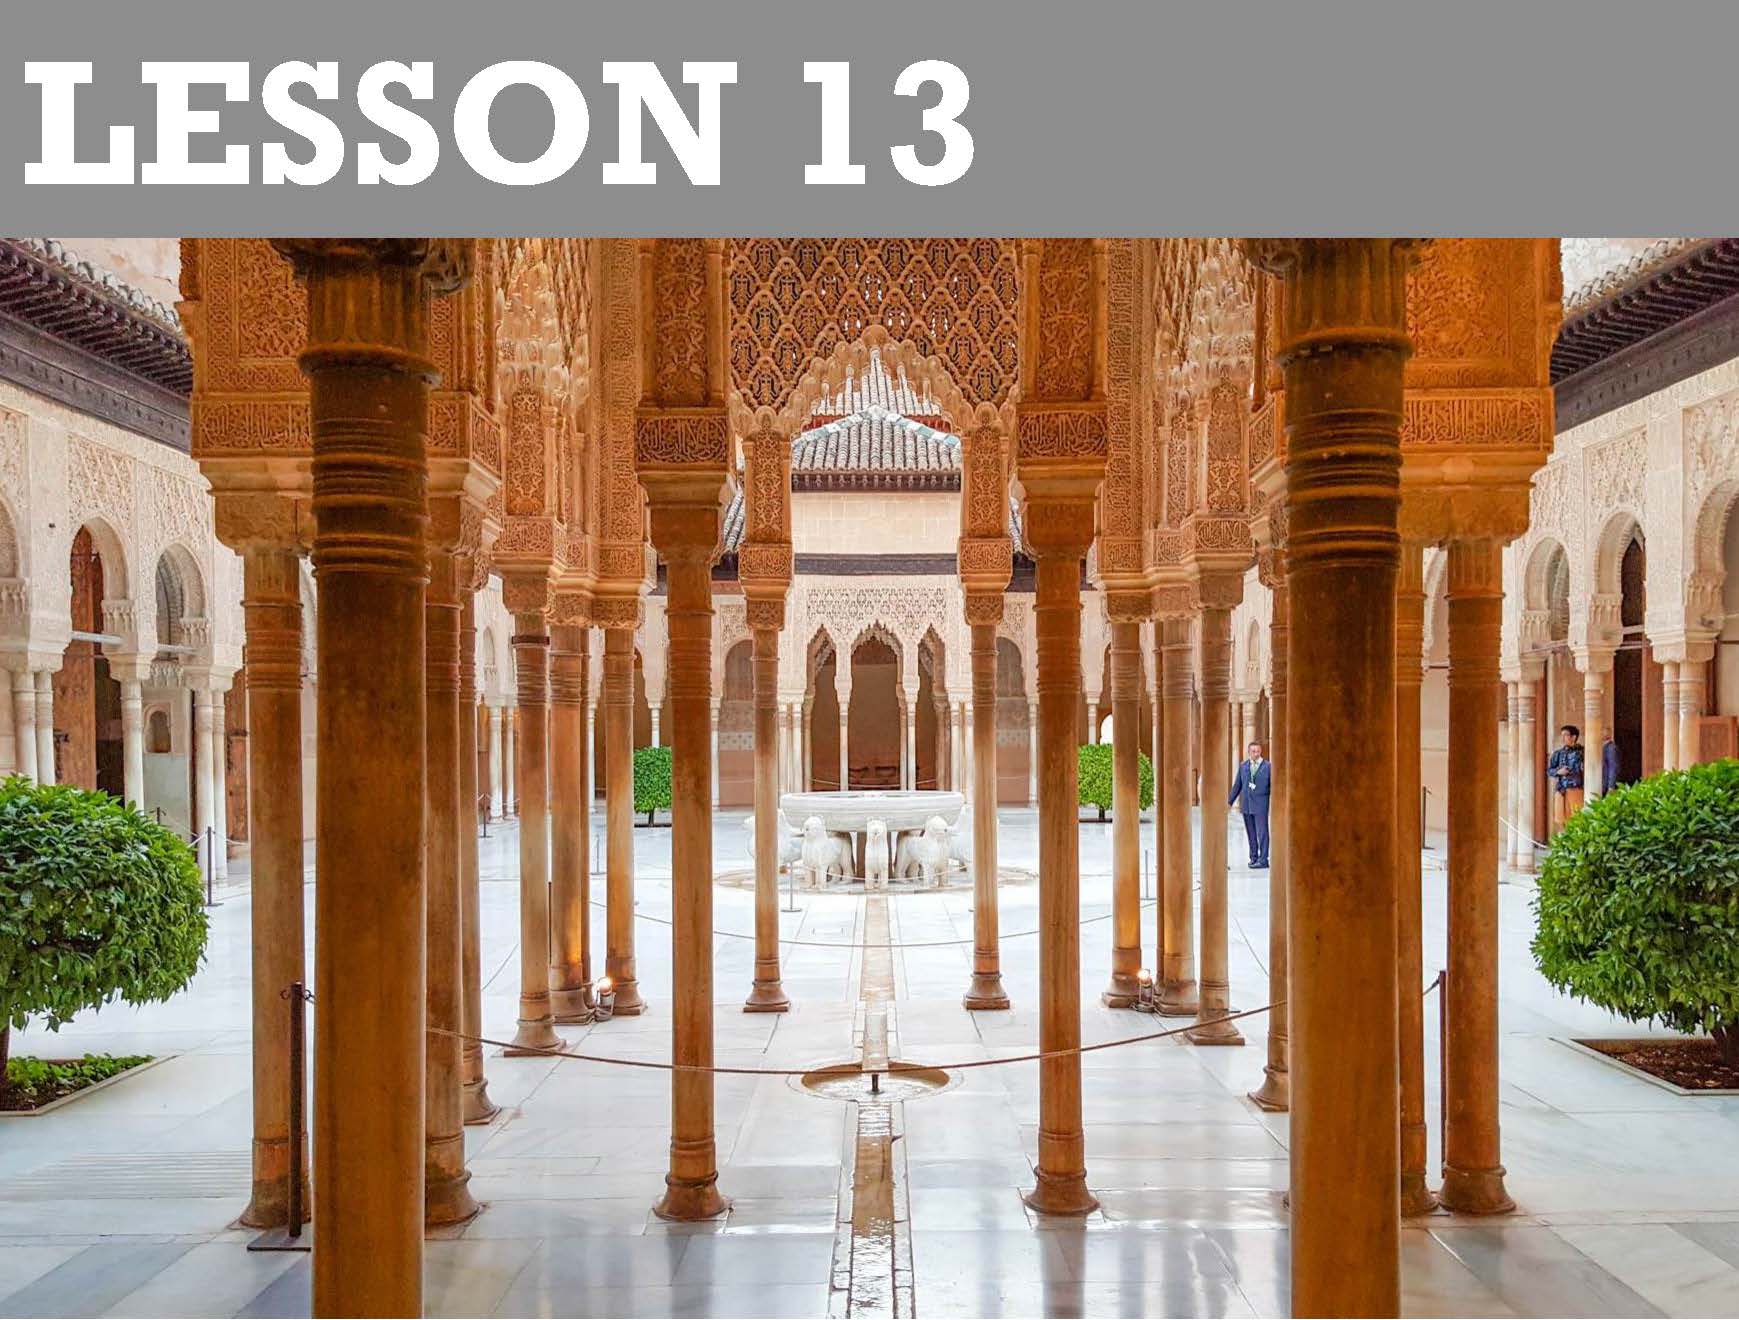 Lesson 13: The Alhambra